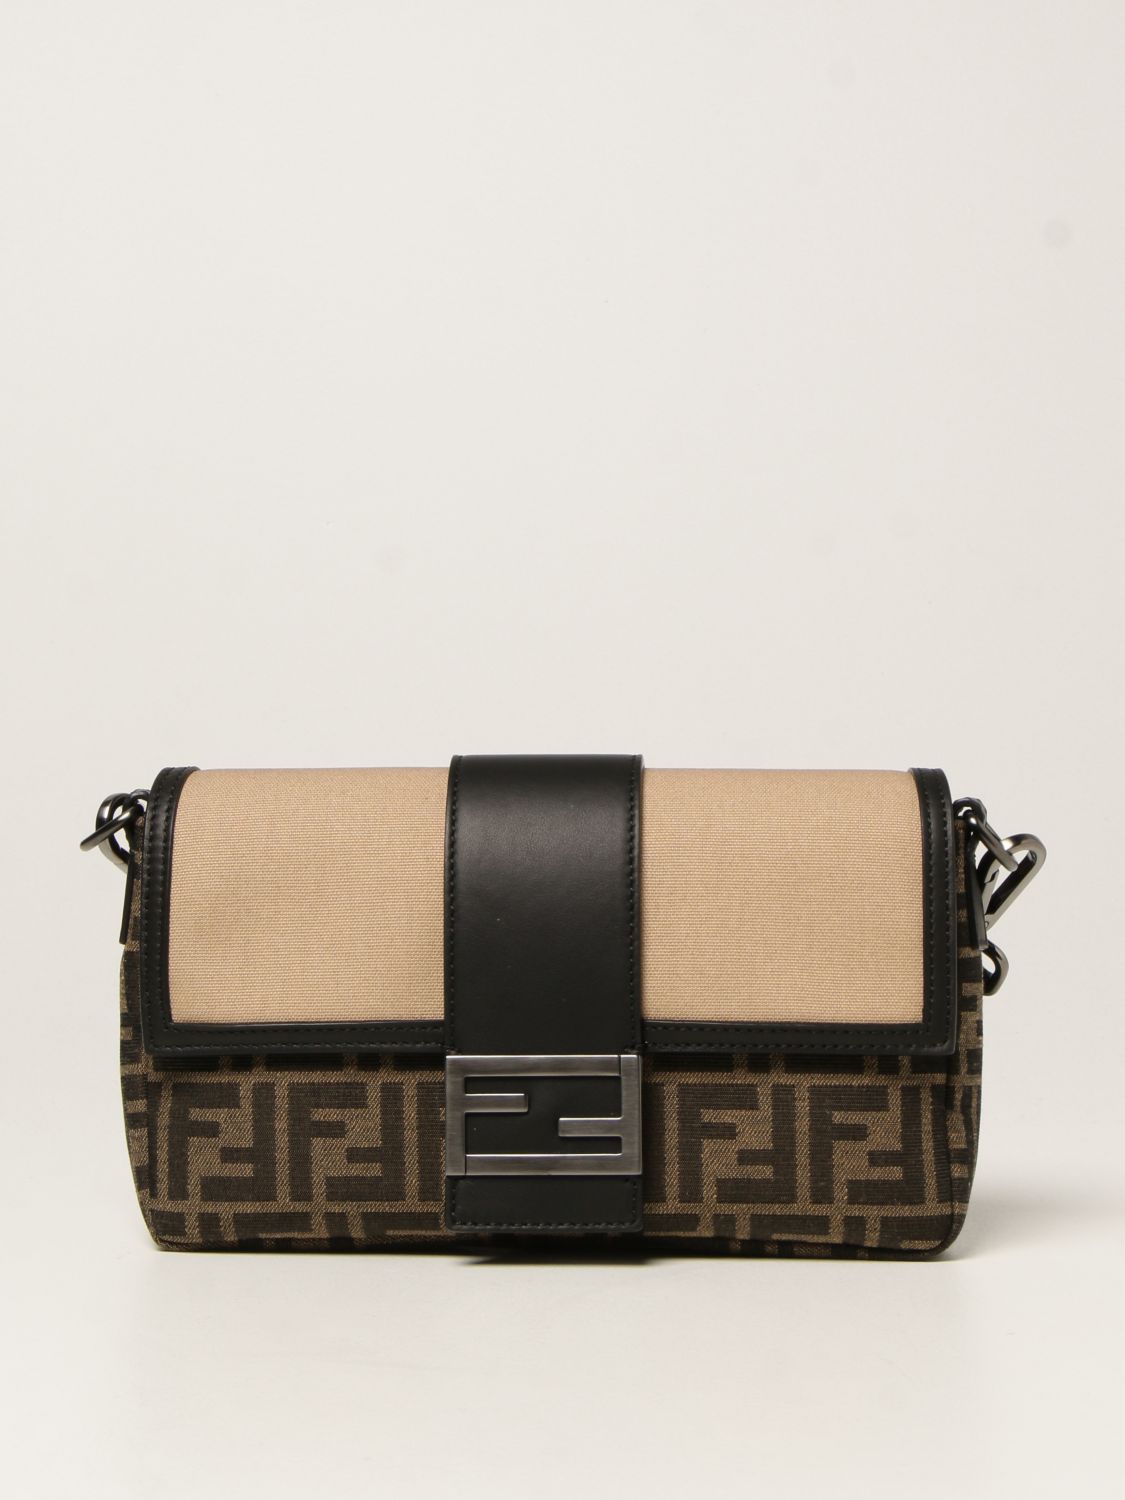 FENDI: Baguette bag / belt bag in FF fabric - Tobacco | Fendi belt bag ...